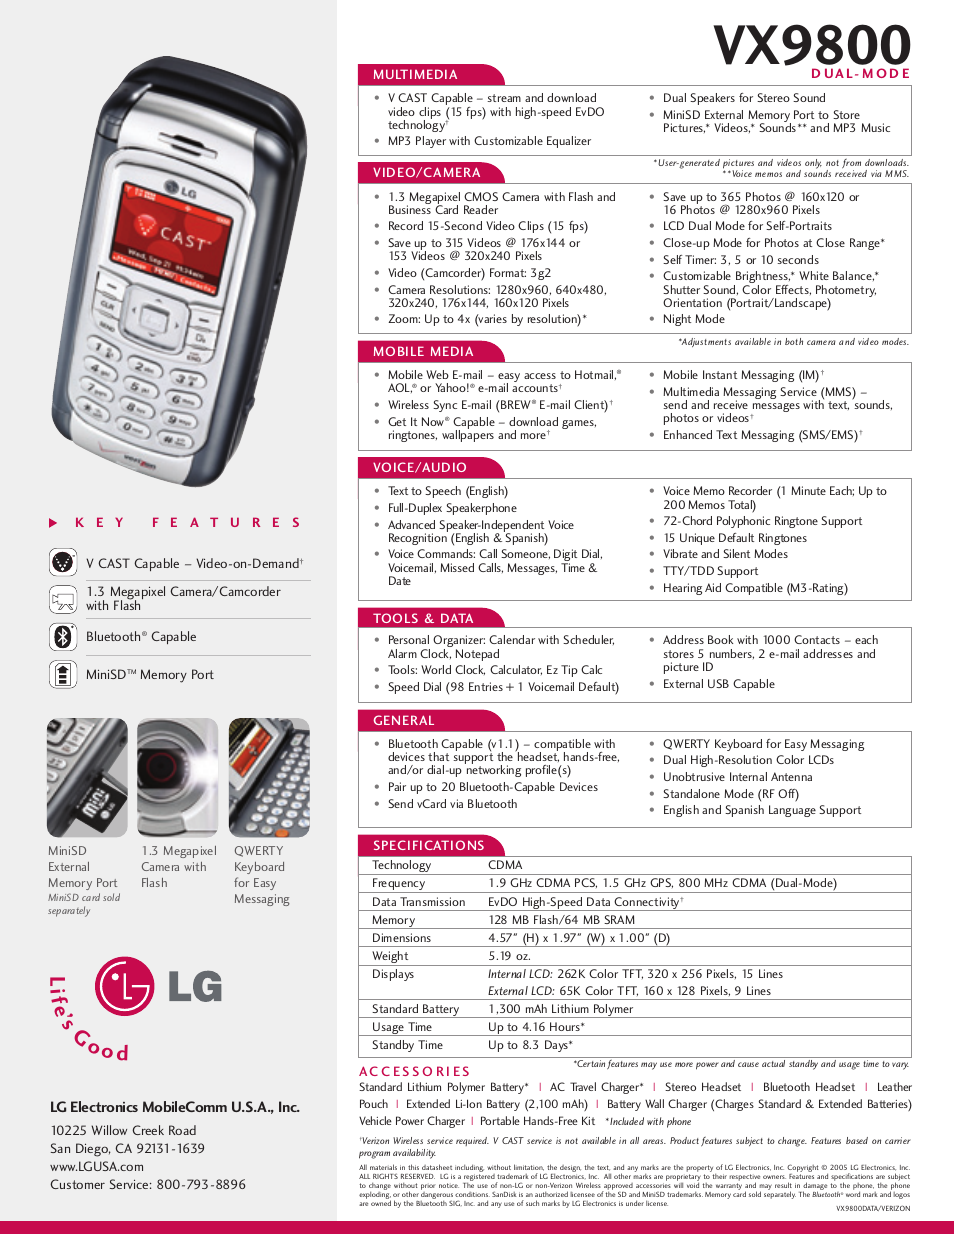 Vx9800 | LG MINISD VX9800 User Manual | Page 2 / 2